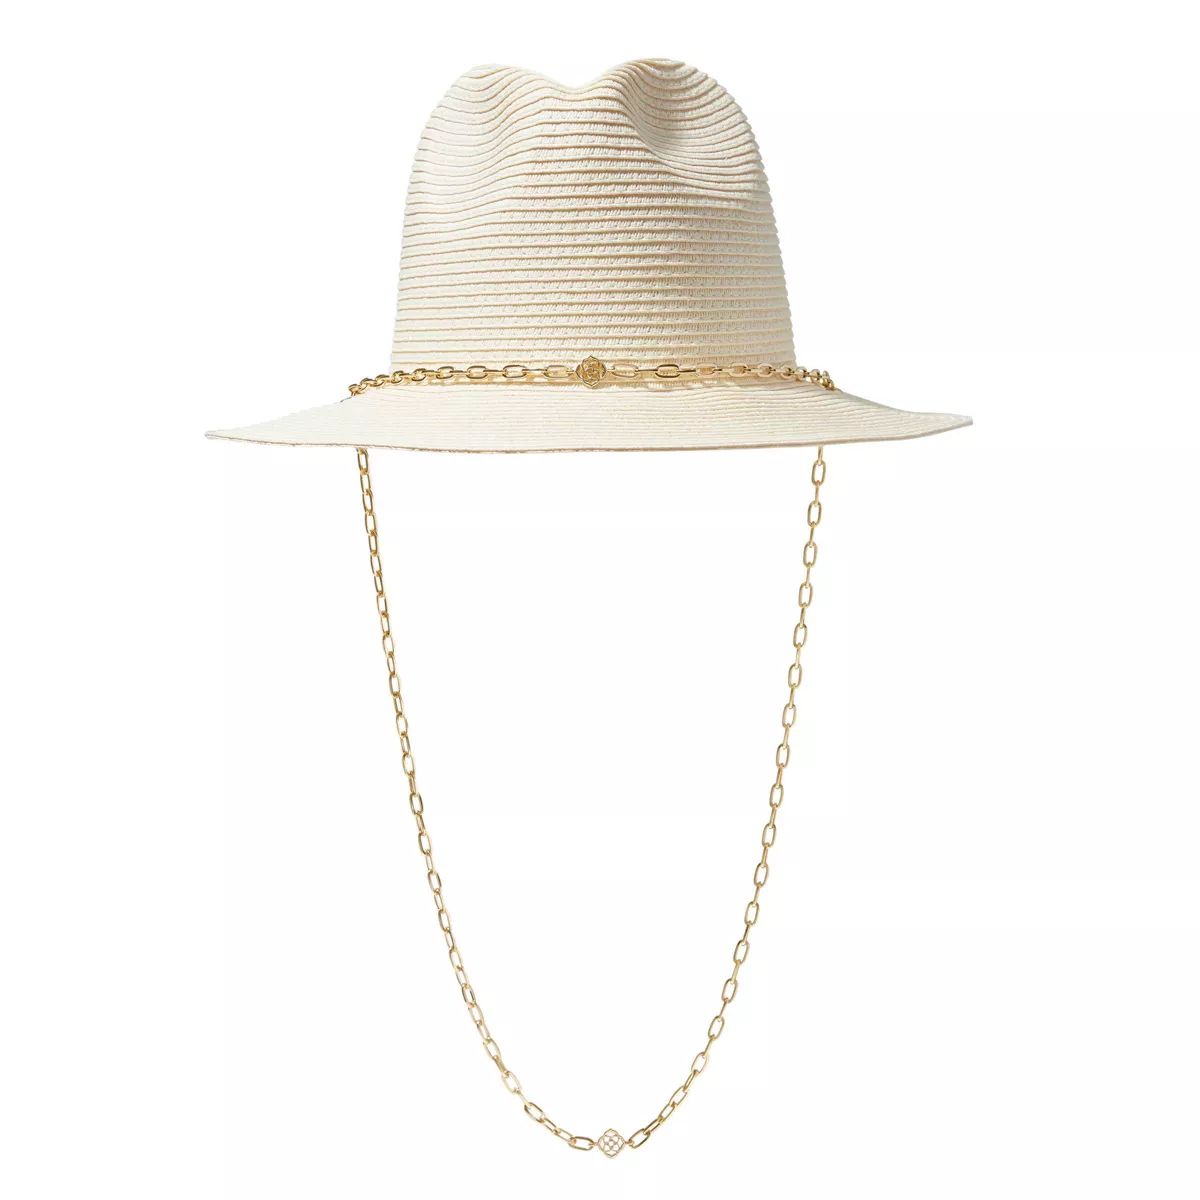 Kendra Scott Pasleigh Panama Chain Chin Strap Hat - White | Target